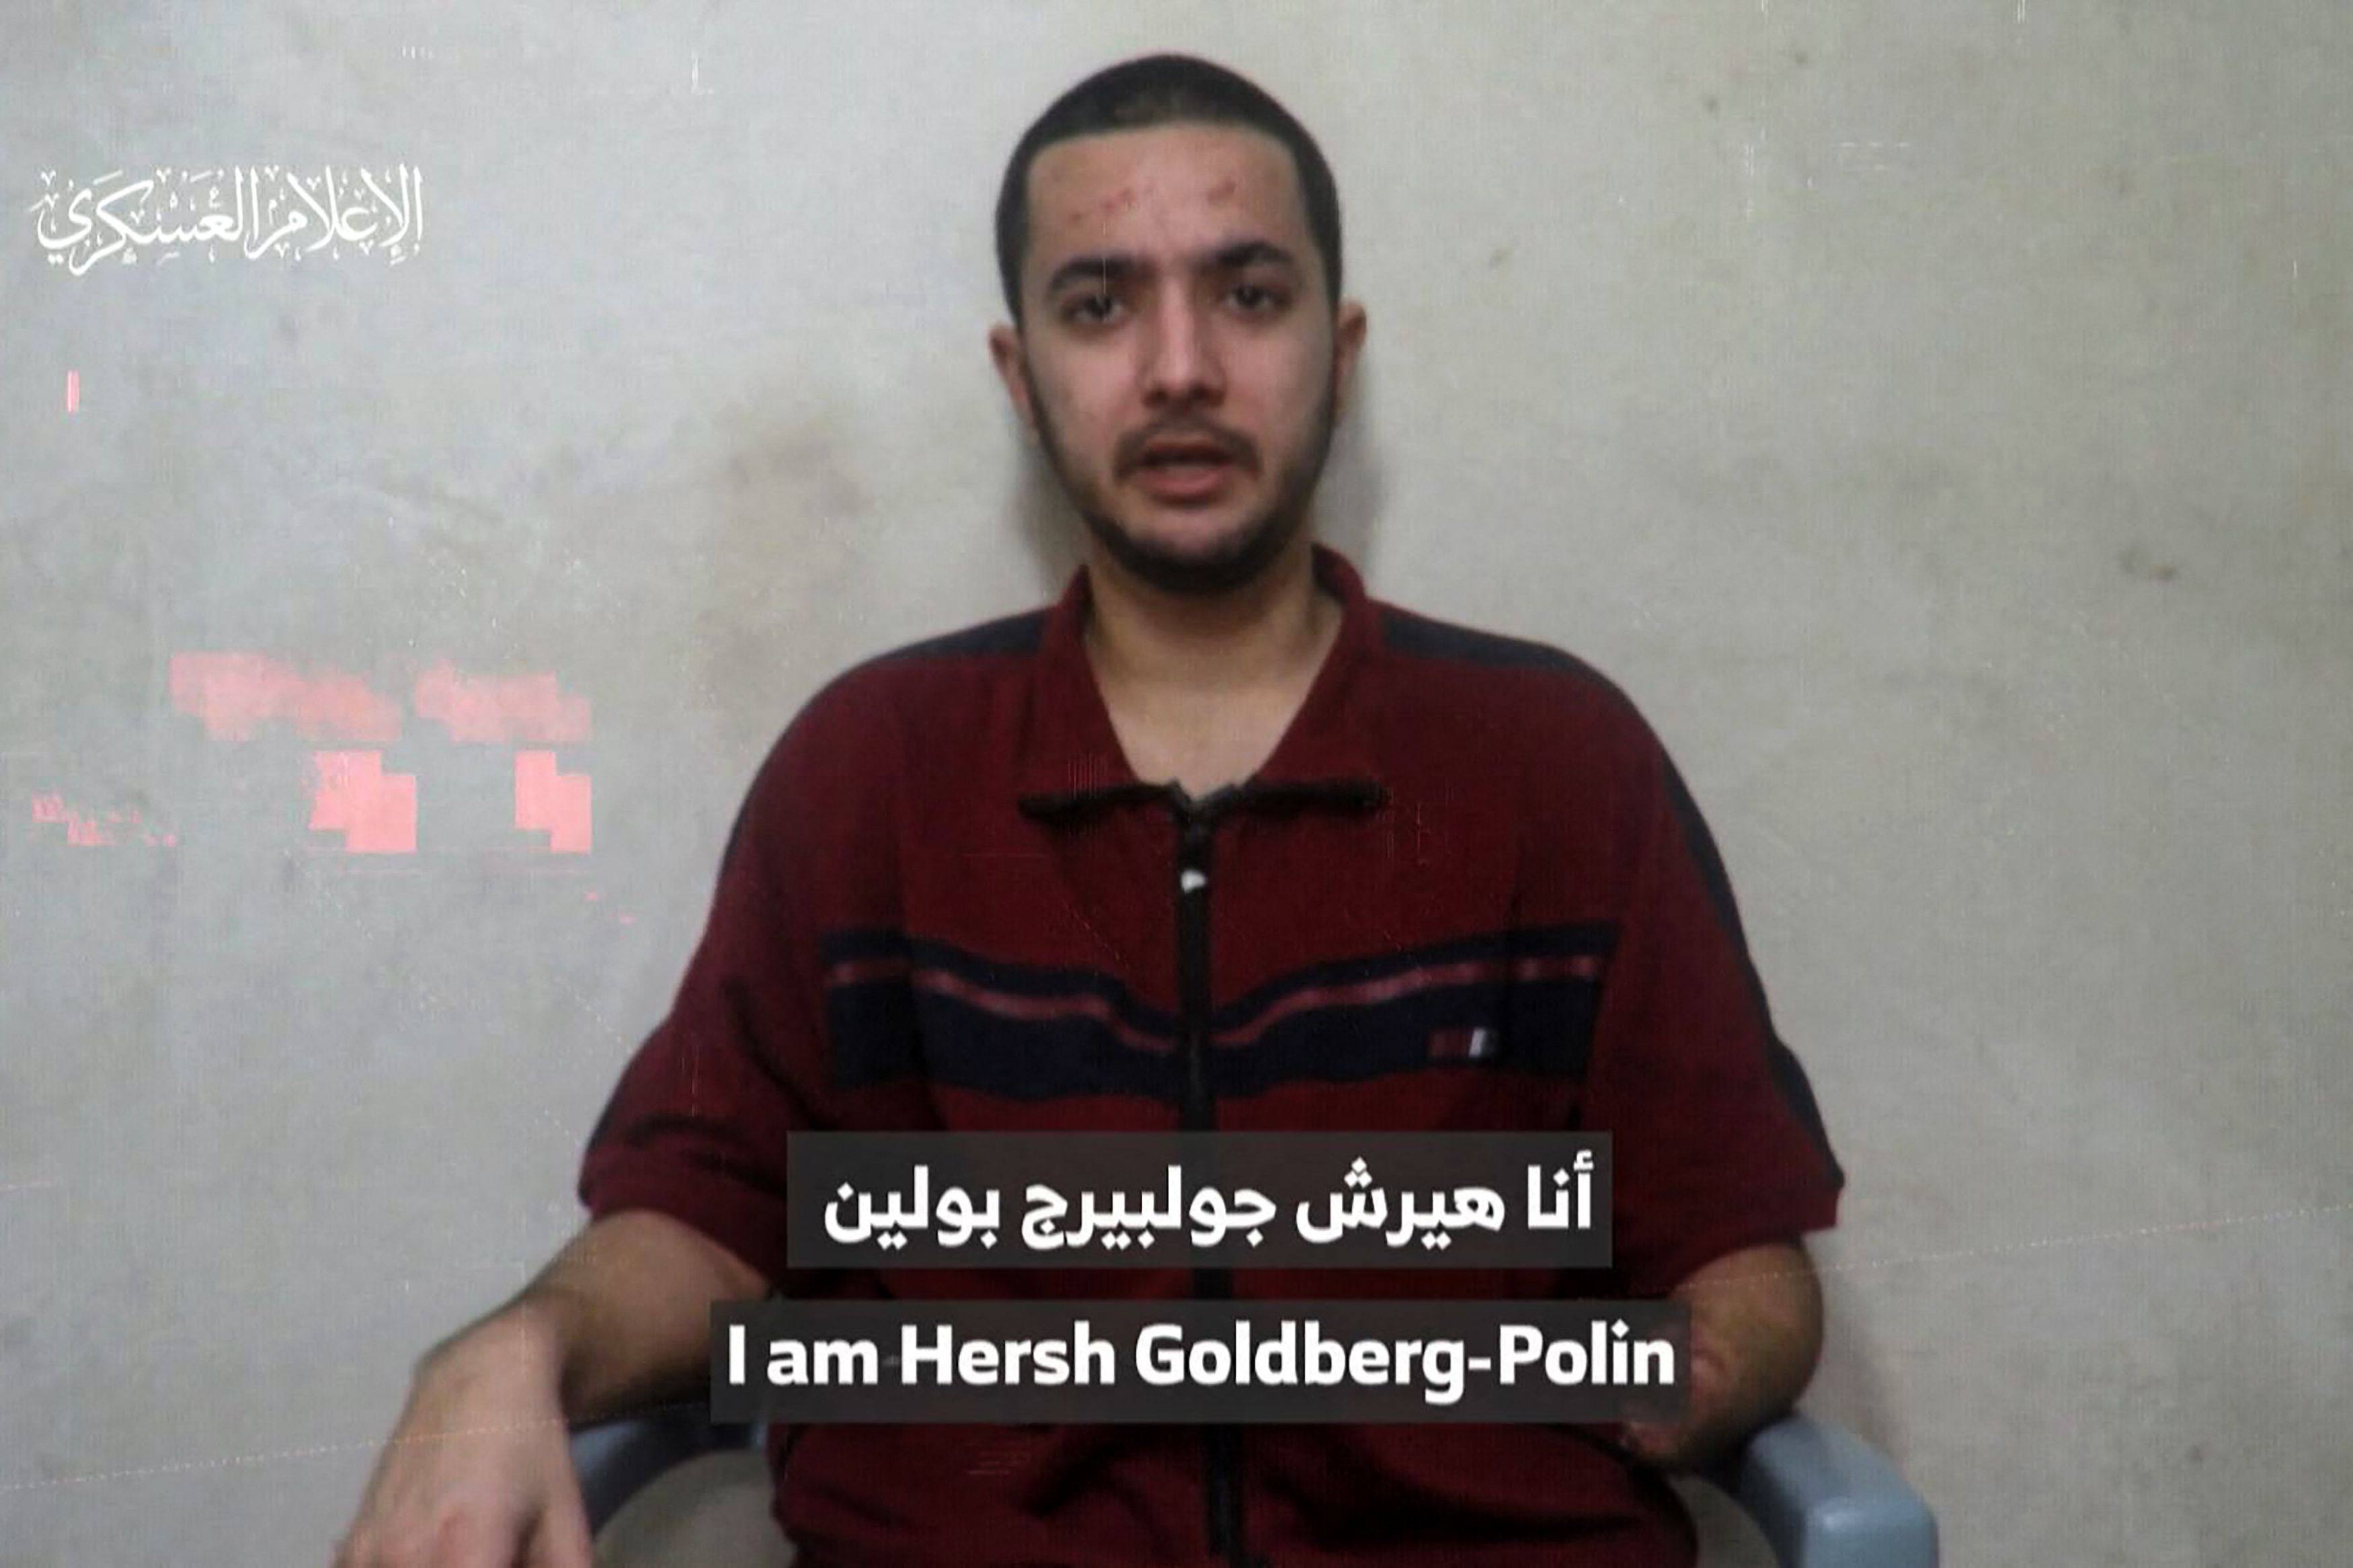 Israeli-American man identified as Hersh Goldberg-Polin in the video. Photo: Hamas Media via AFP 